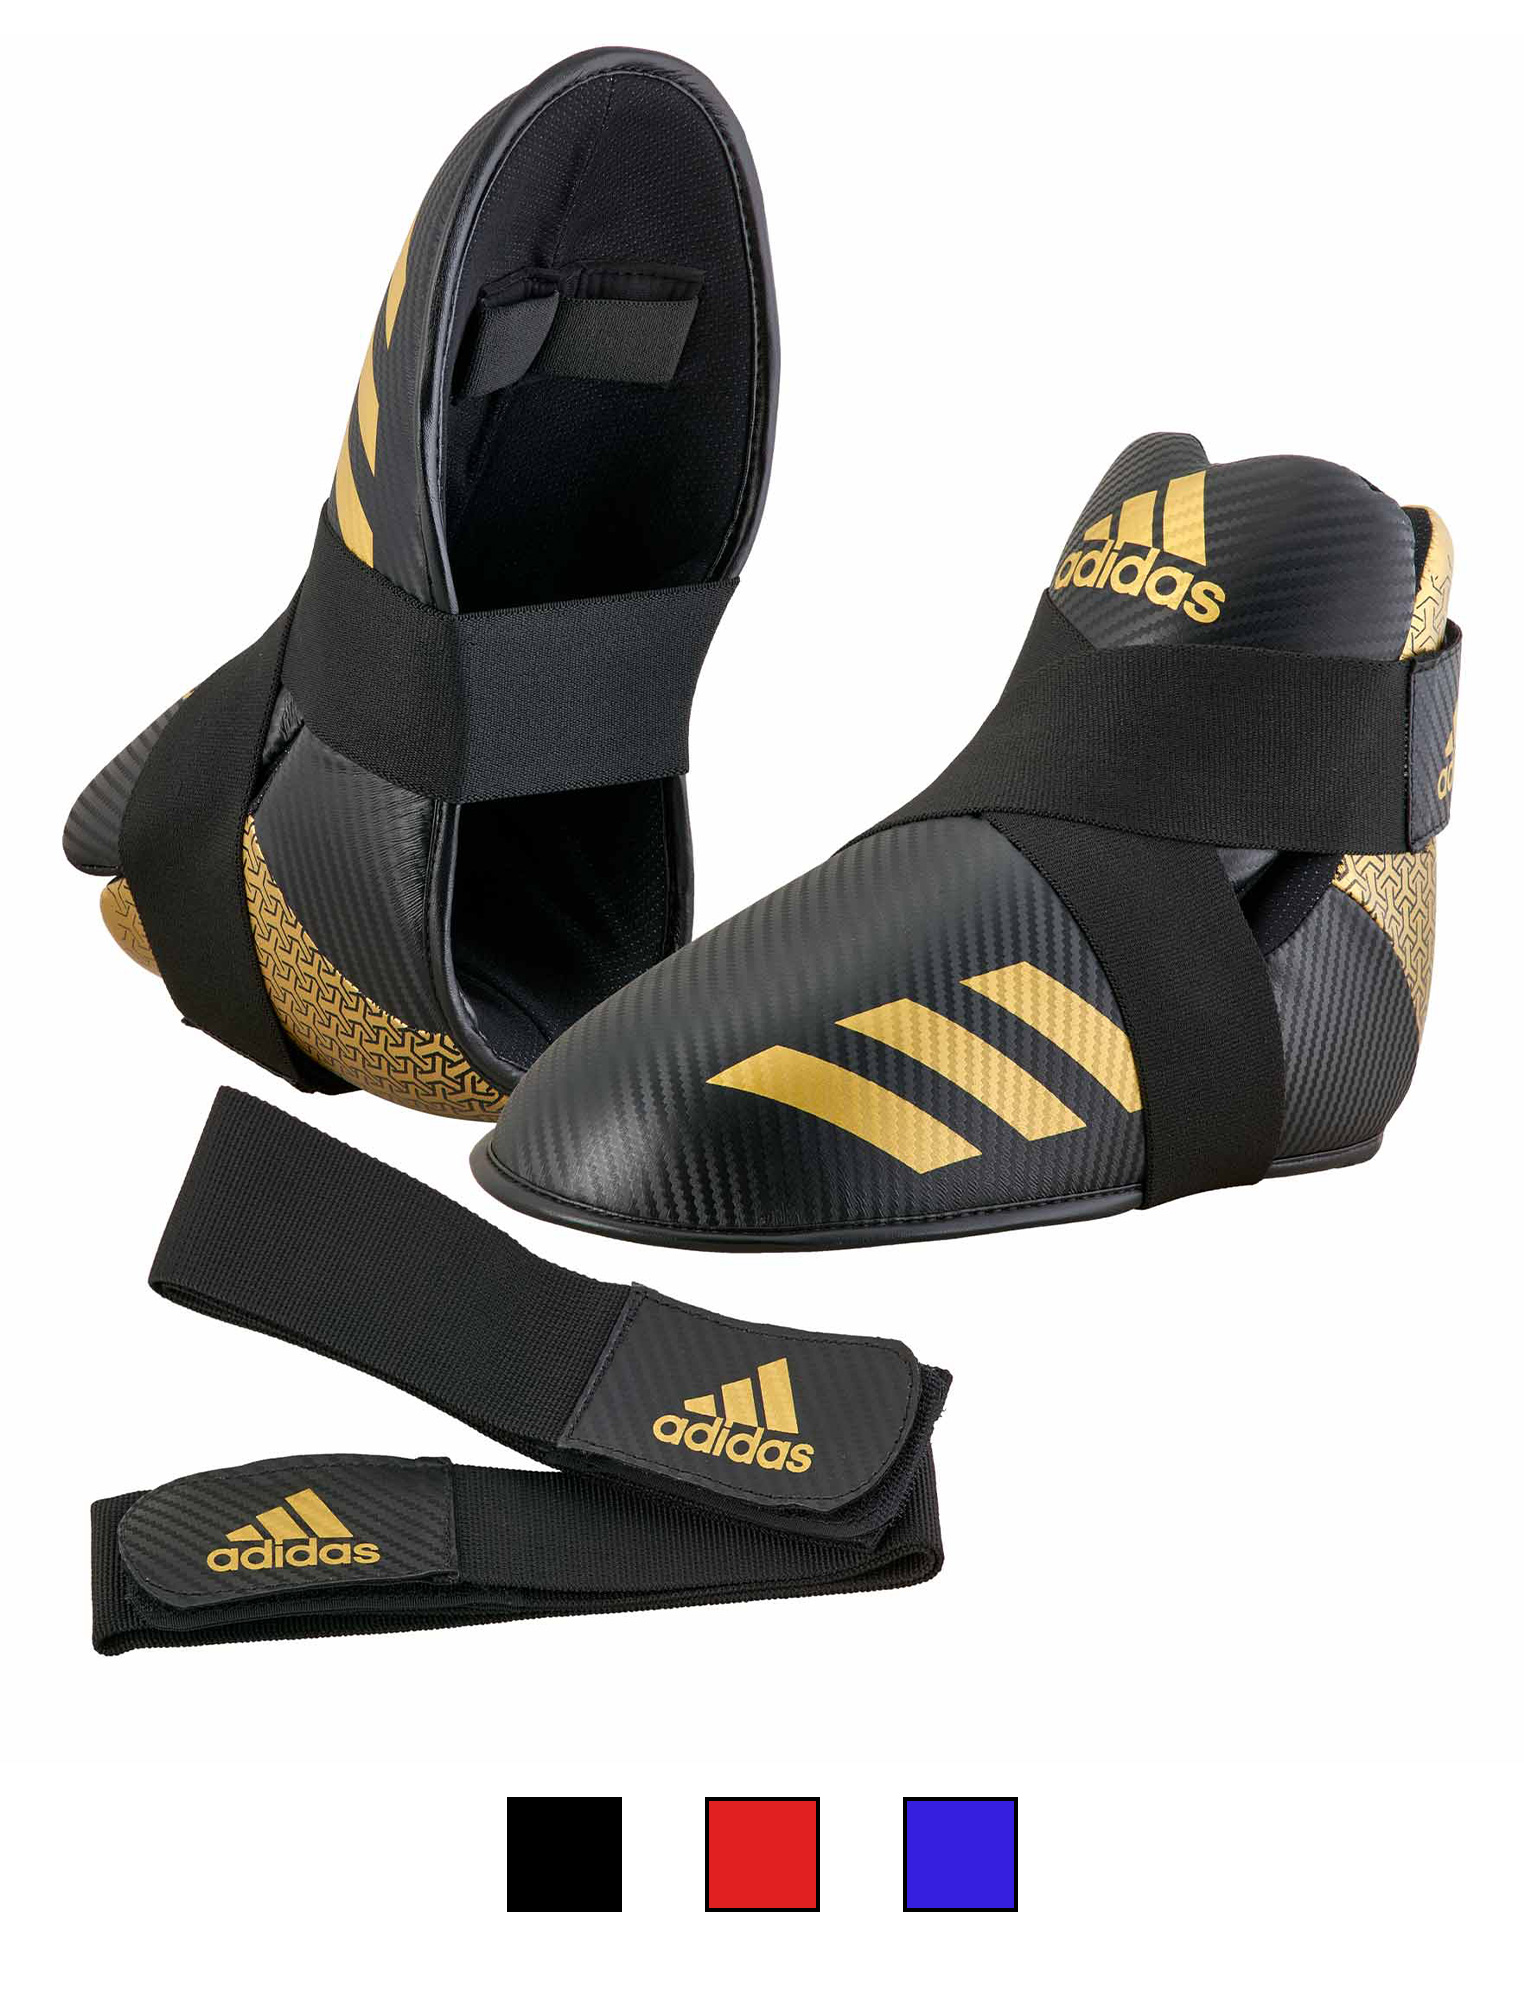 adidas Super Safety Kicks, adiKBB300HD black/gold